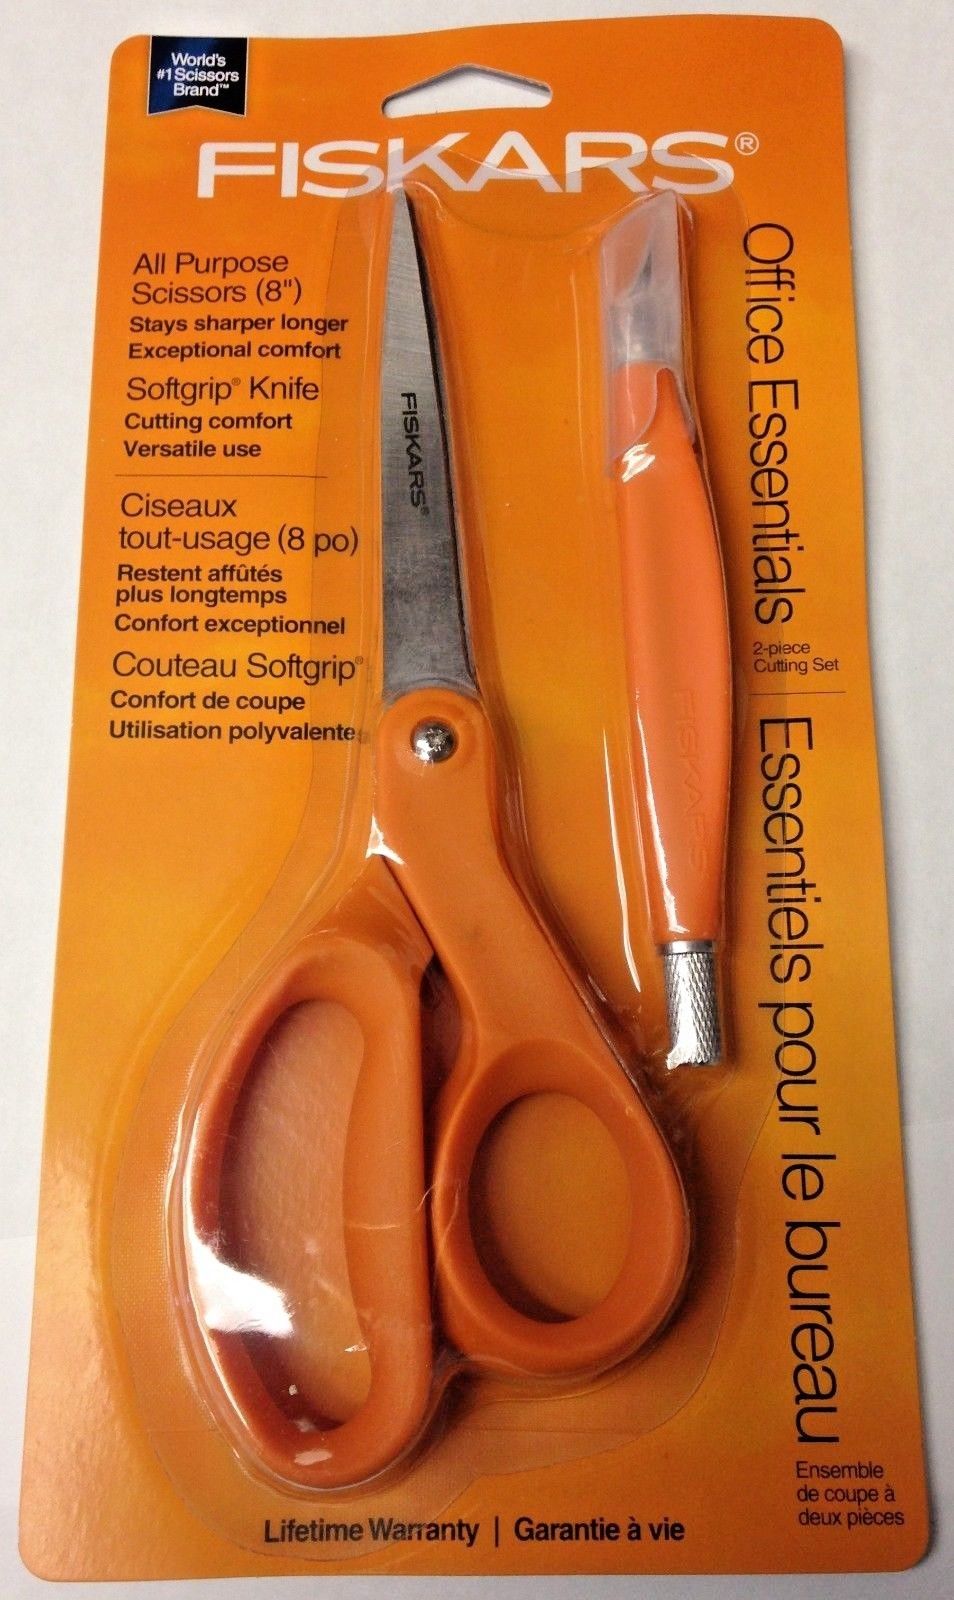 Fiskars 175760-5001 8" All Purpose Scissors With Soft grip Knife